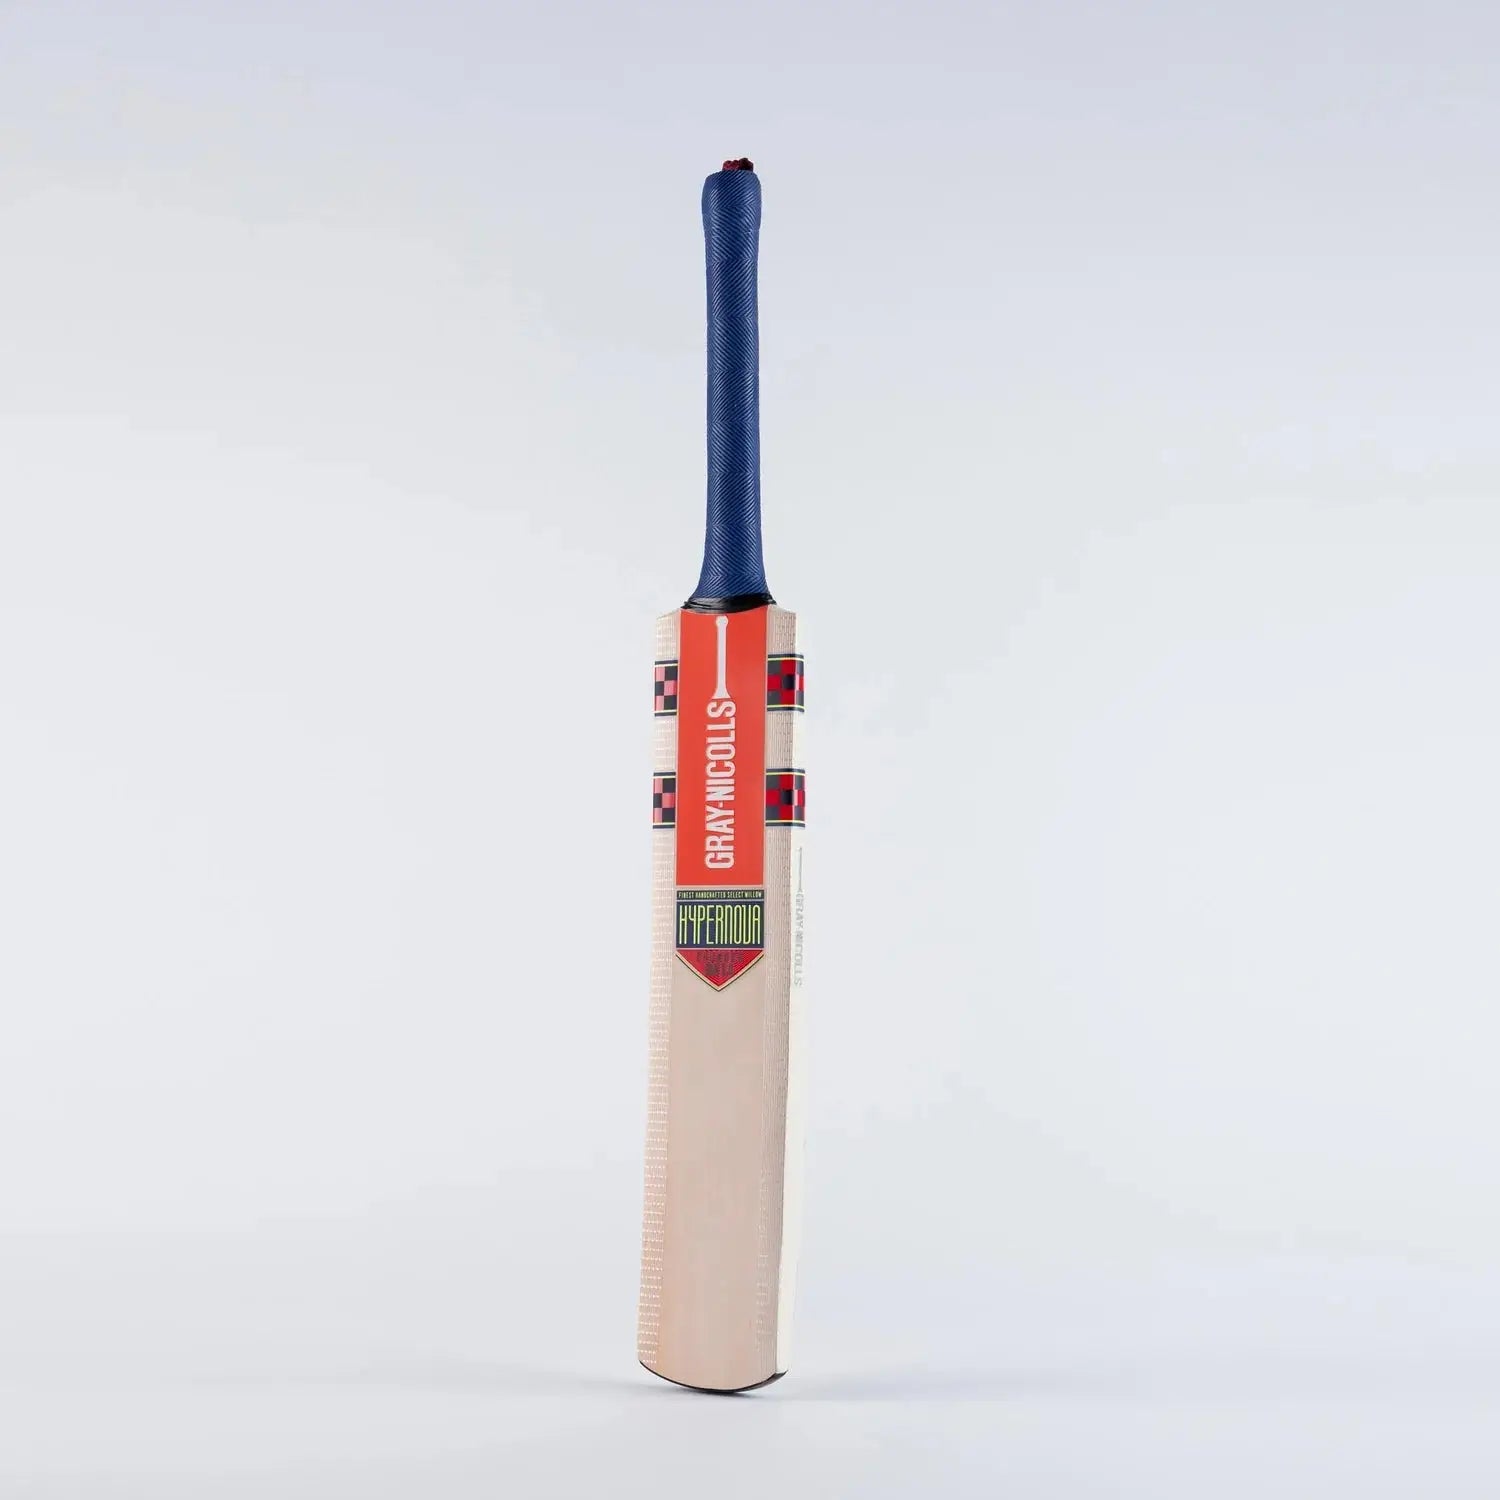 Gray Nicolls Hypernova Thunder Cricket Bat Kashmir Willow (Junior) - Size 4 (9-10 Years Old) - BATS - YOUTHS KASHMIR WILLOW